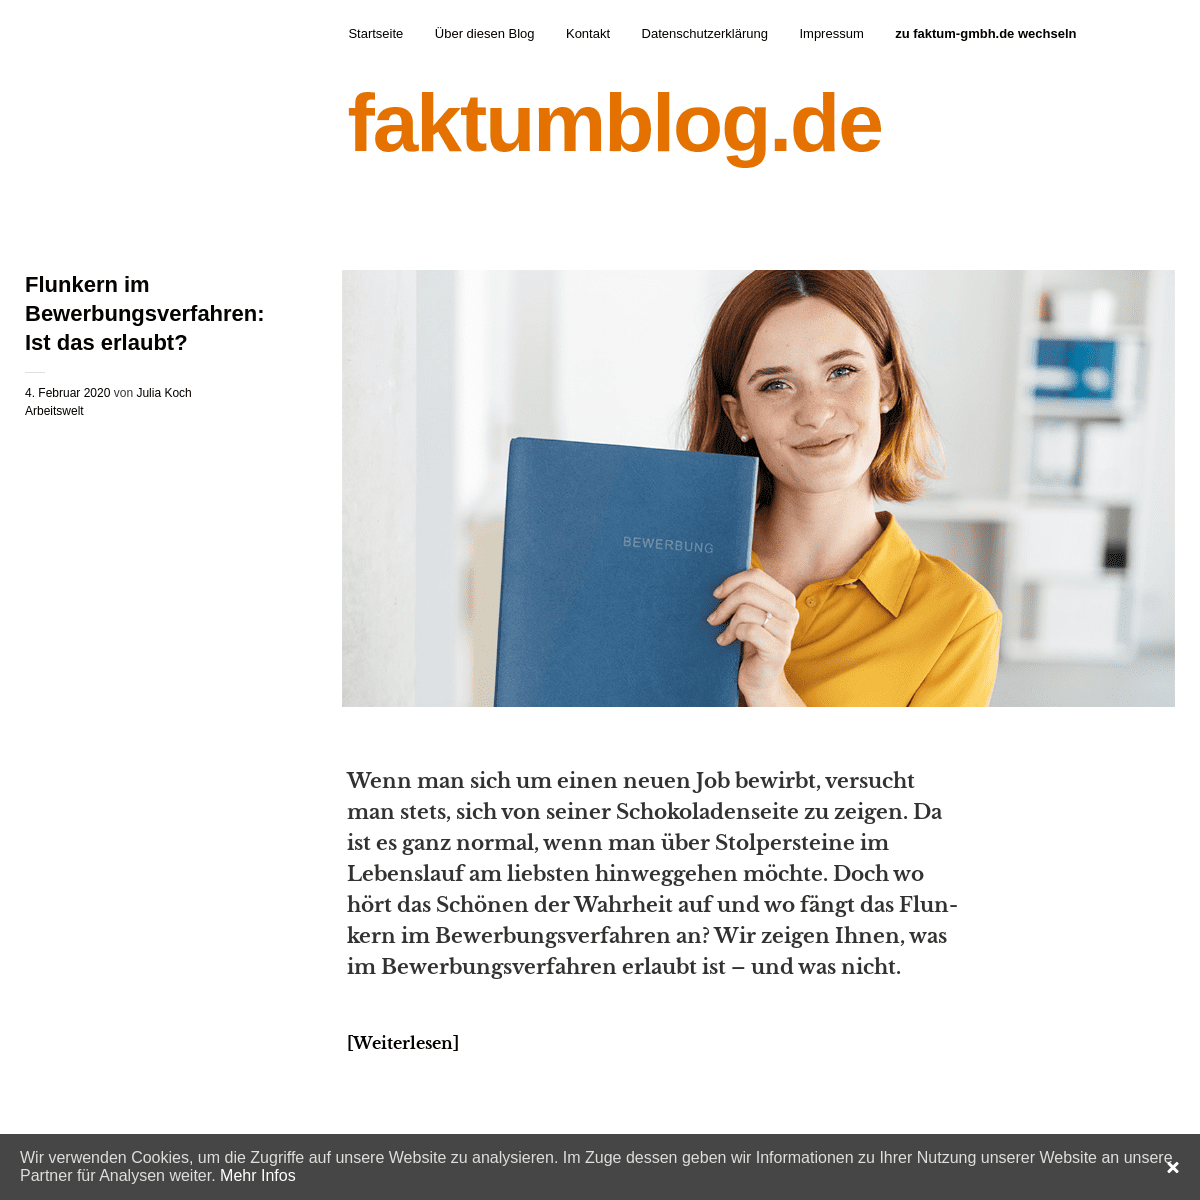 A complete backup of faktumblog.de